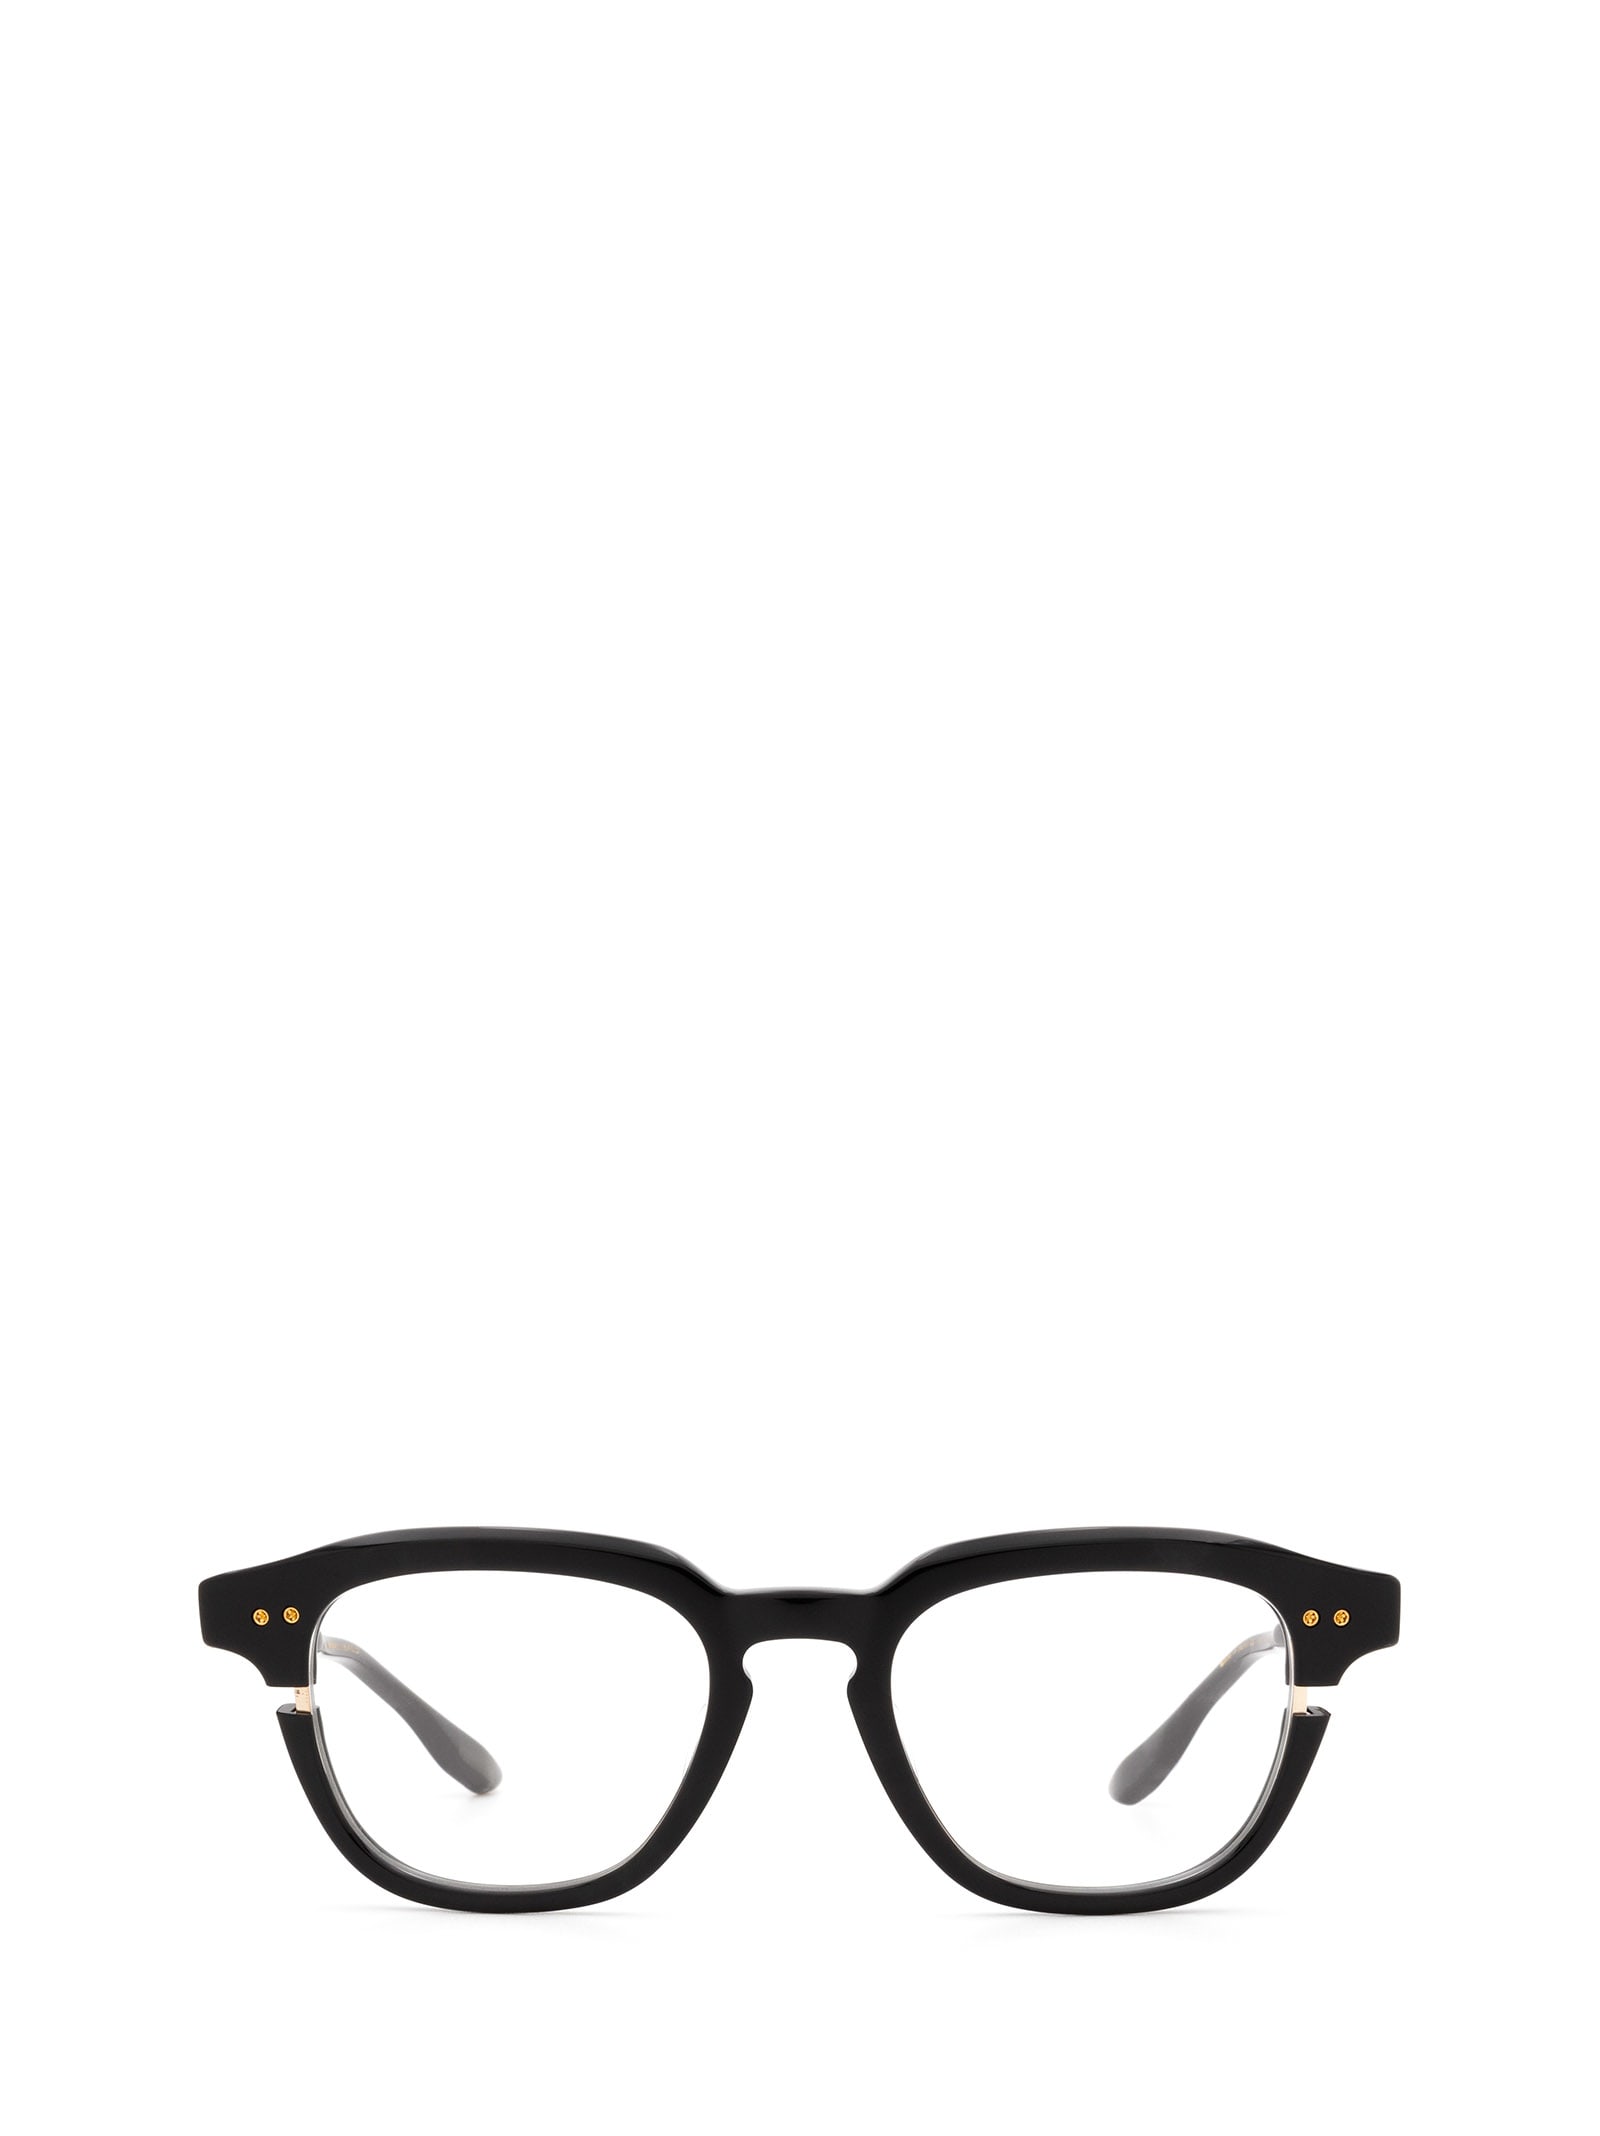 Shop Dita Dtx702-a-01-z Black & White Gold Glasses